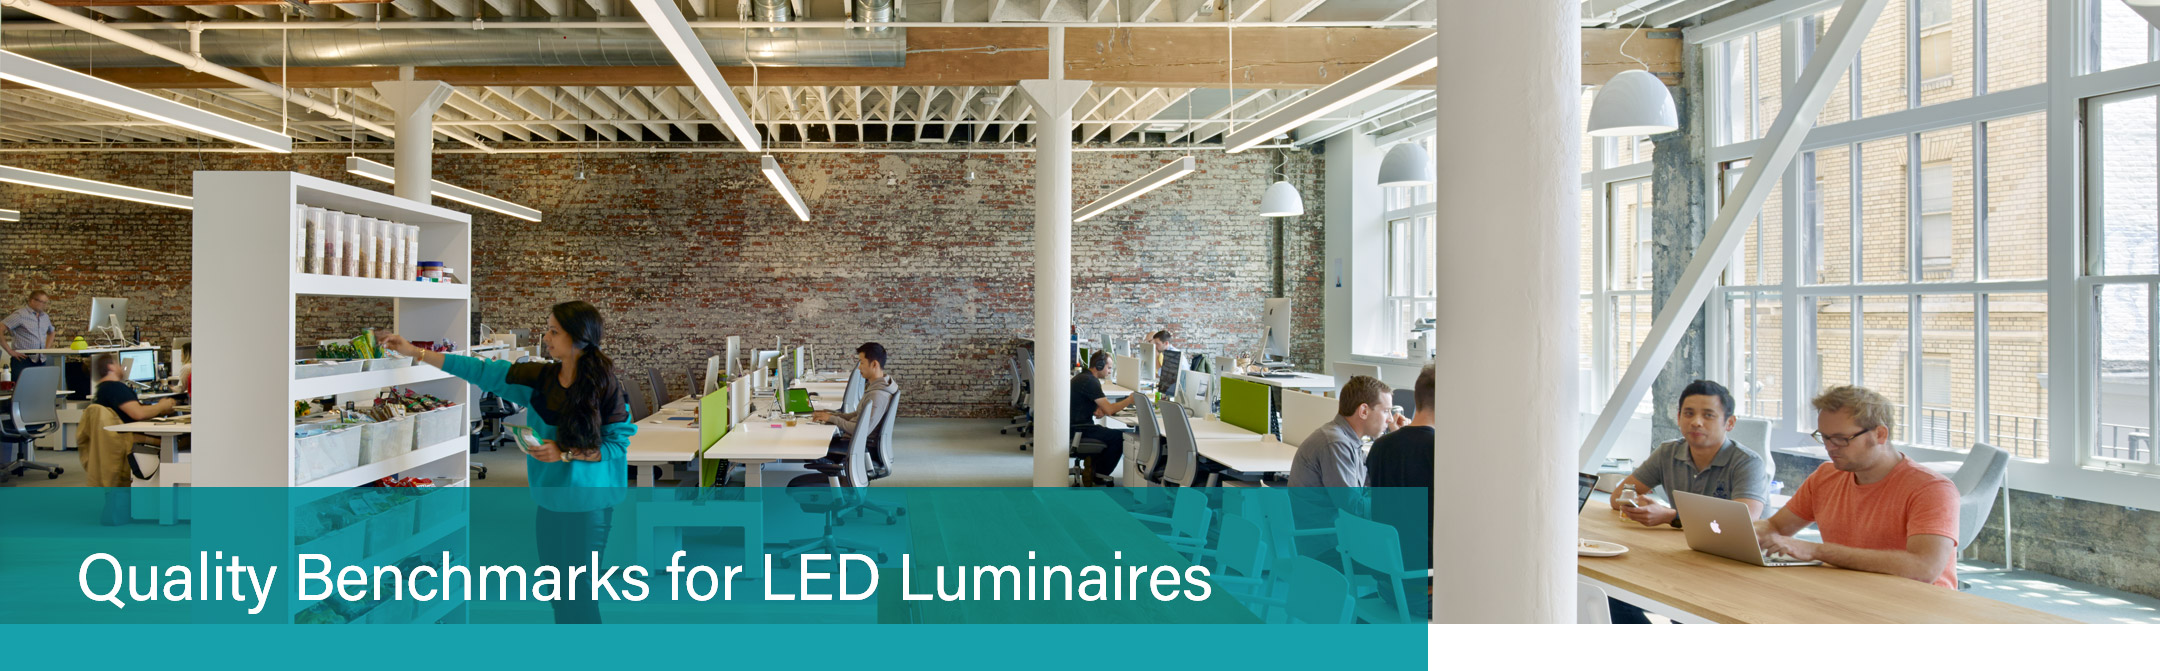 Quality Benchmarks for LED Luminaires